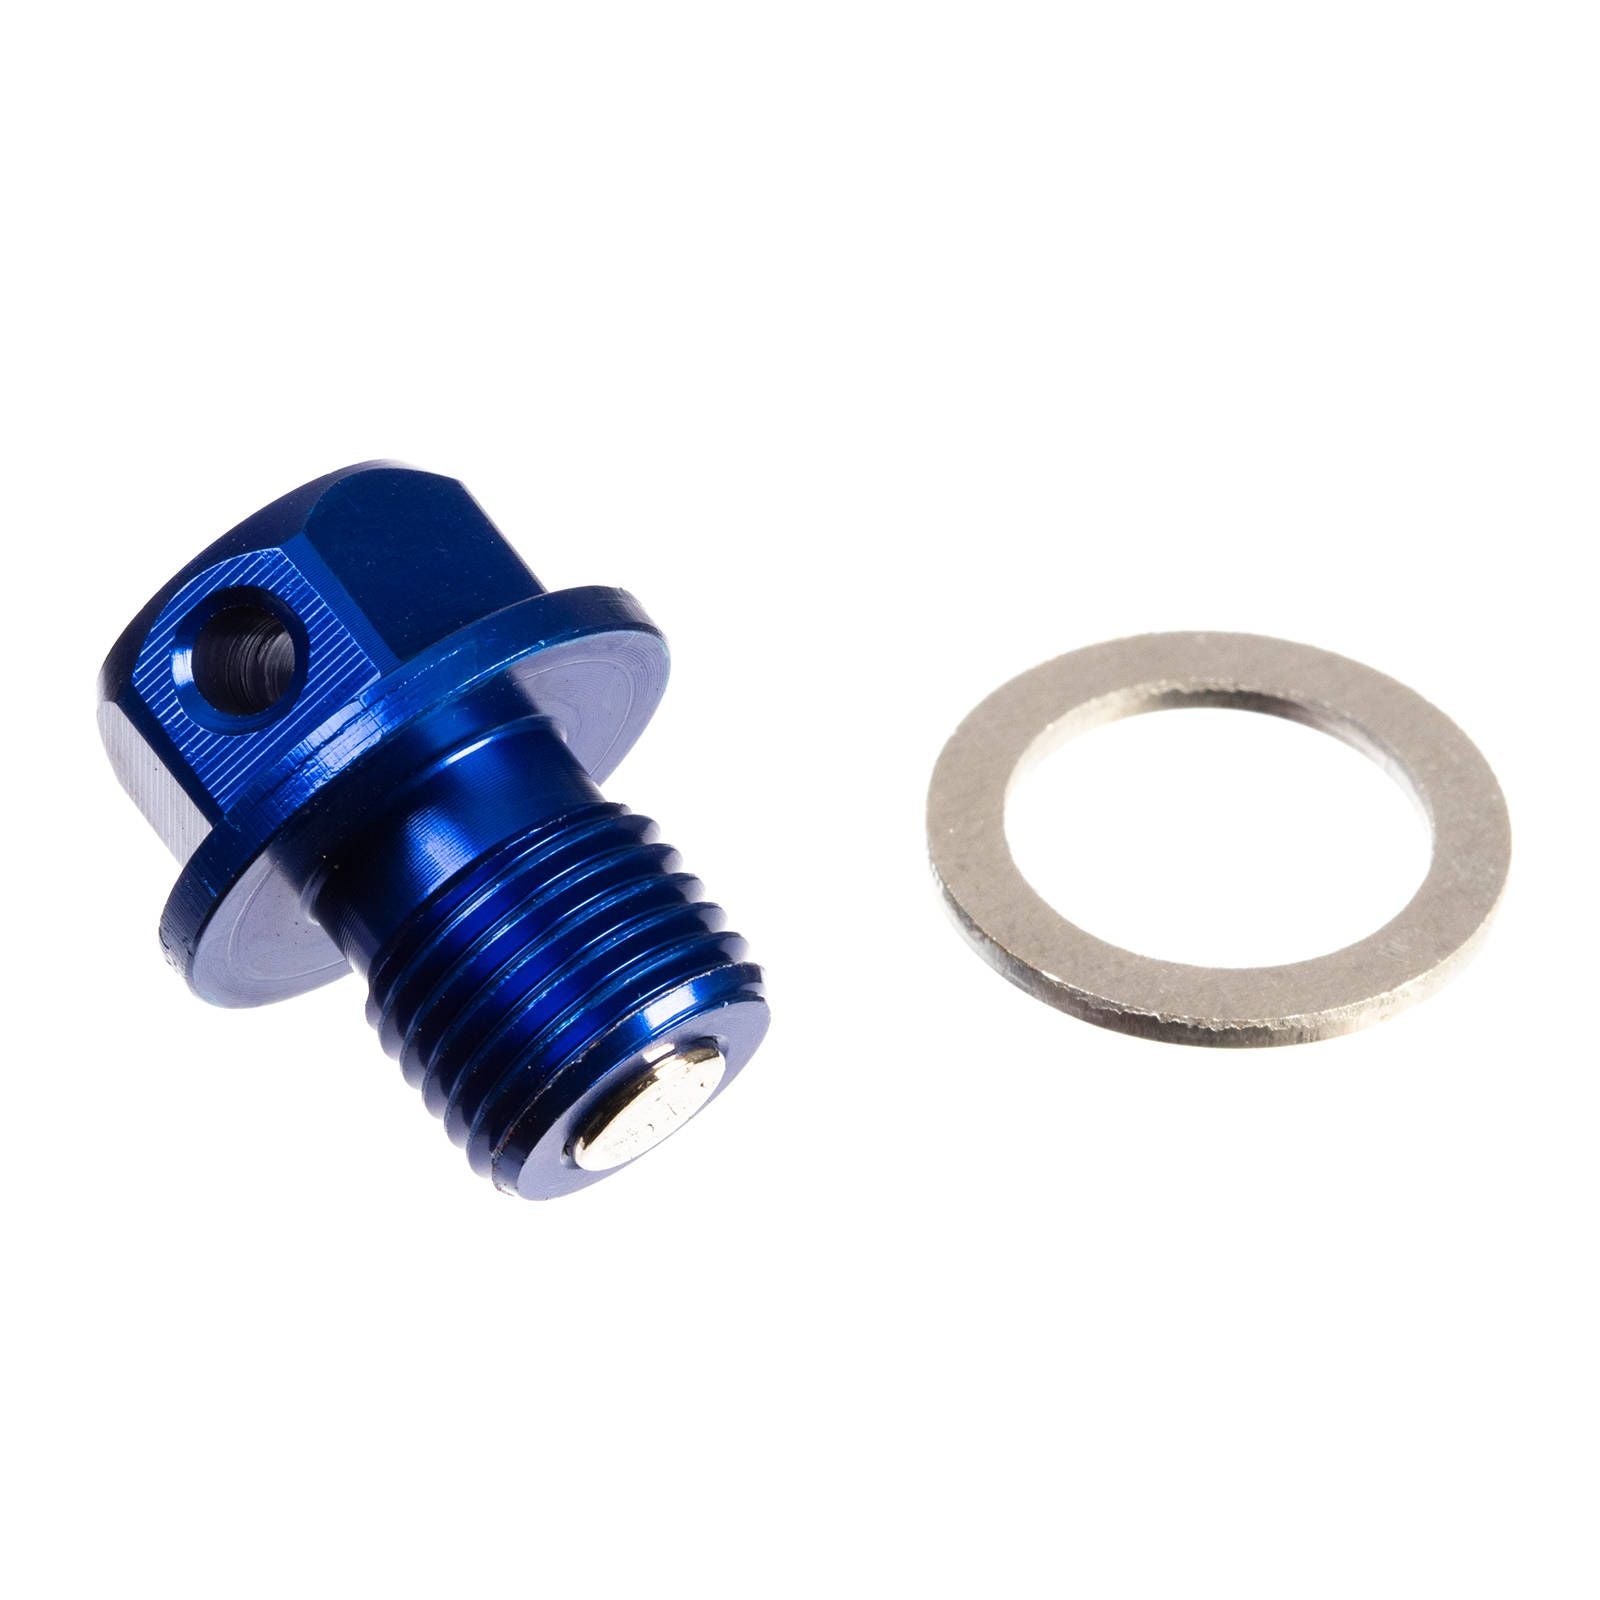 New WHITES Magnetic Sump Plug M12 x 12 x 1.25 - Blue #WPMDP1212125B